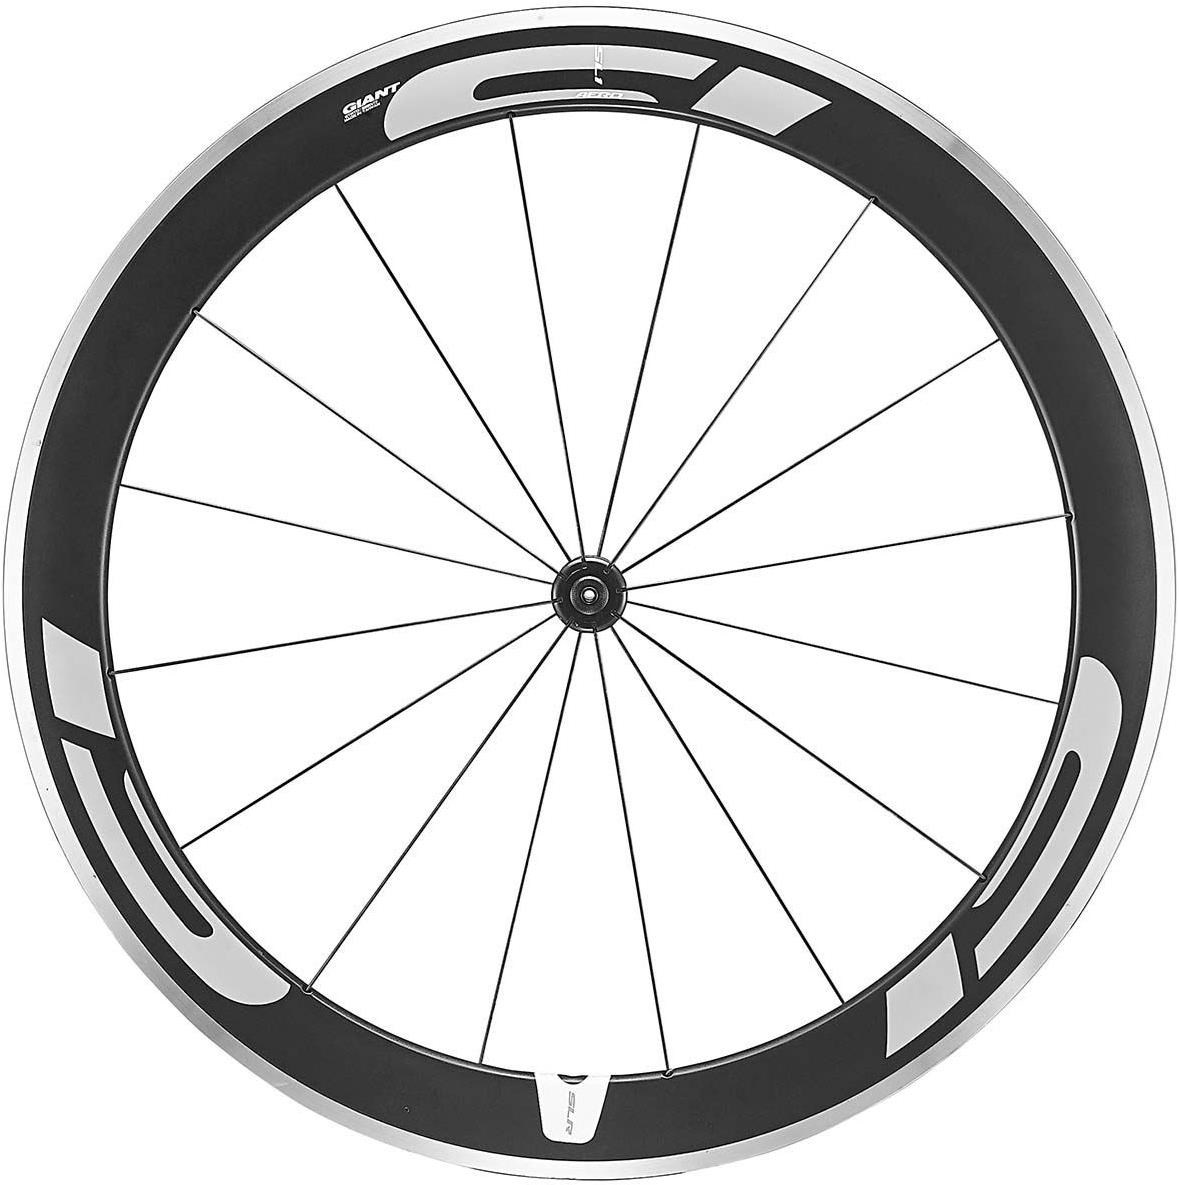 Giant SL 1 Aero Front Road Wheel product image